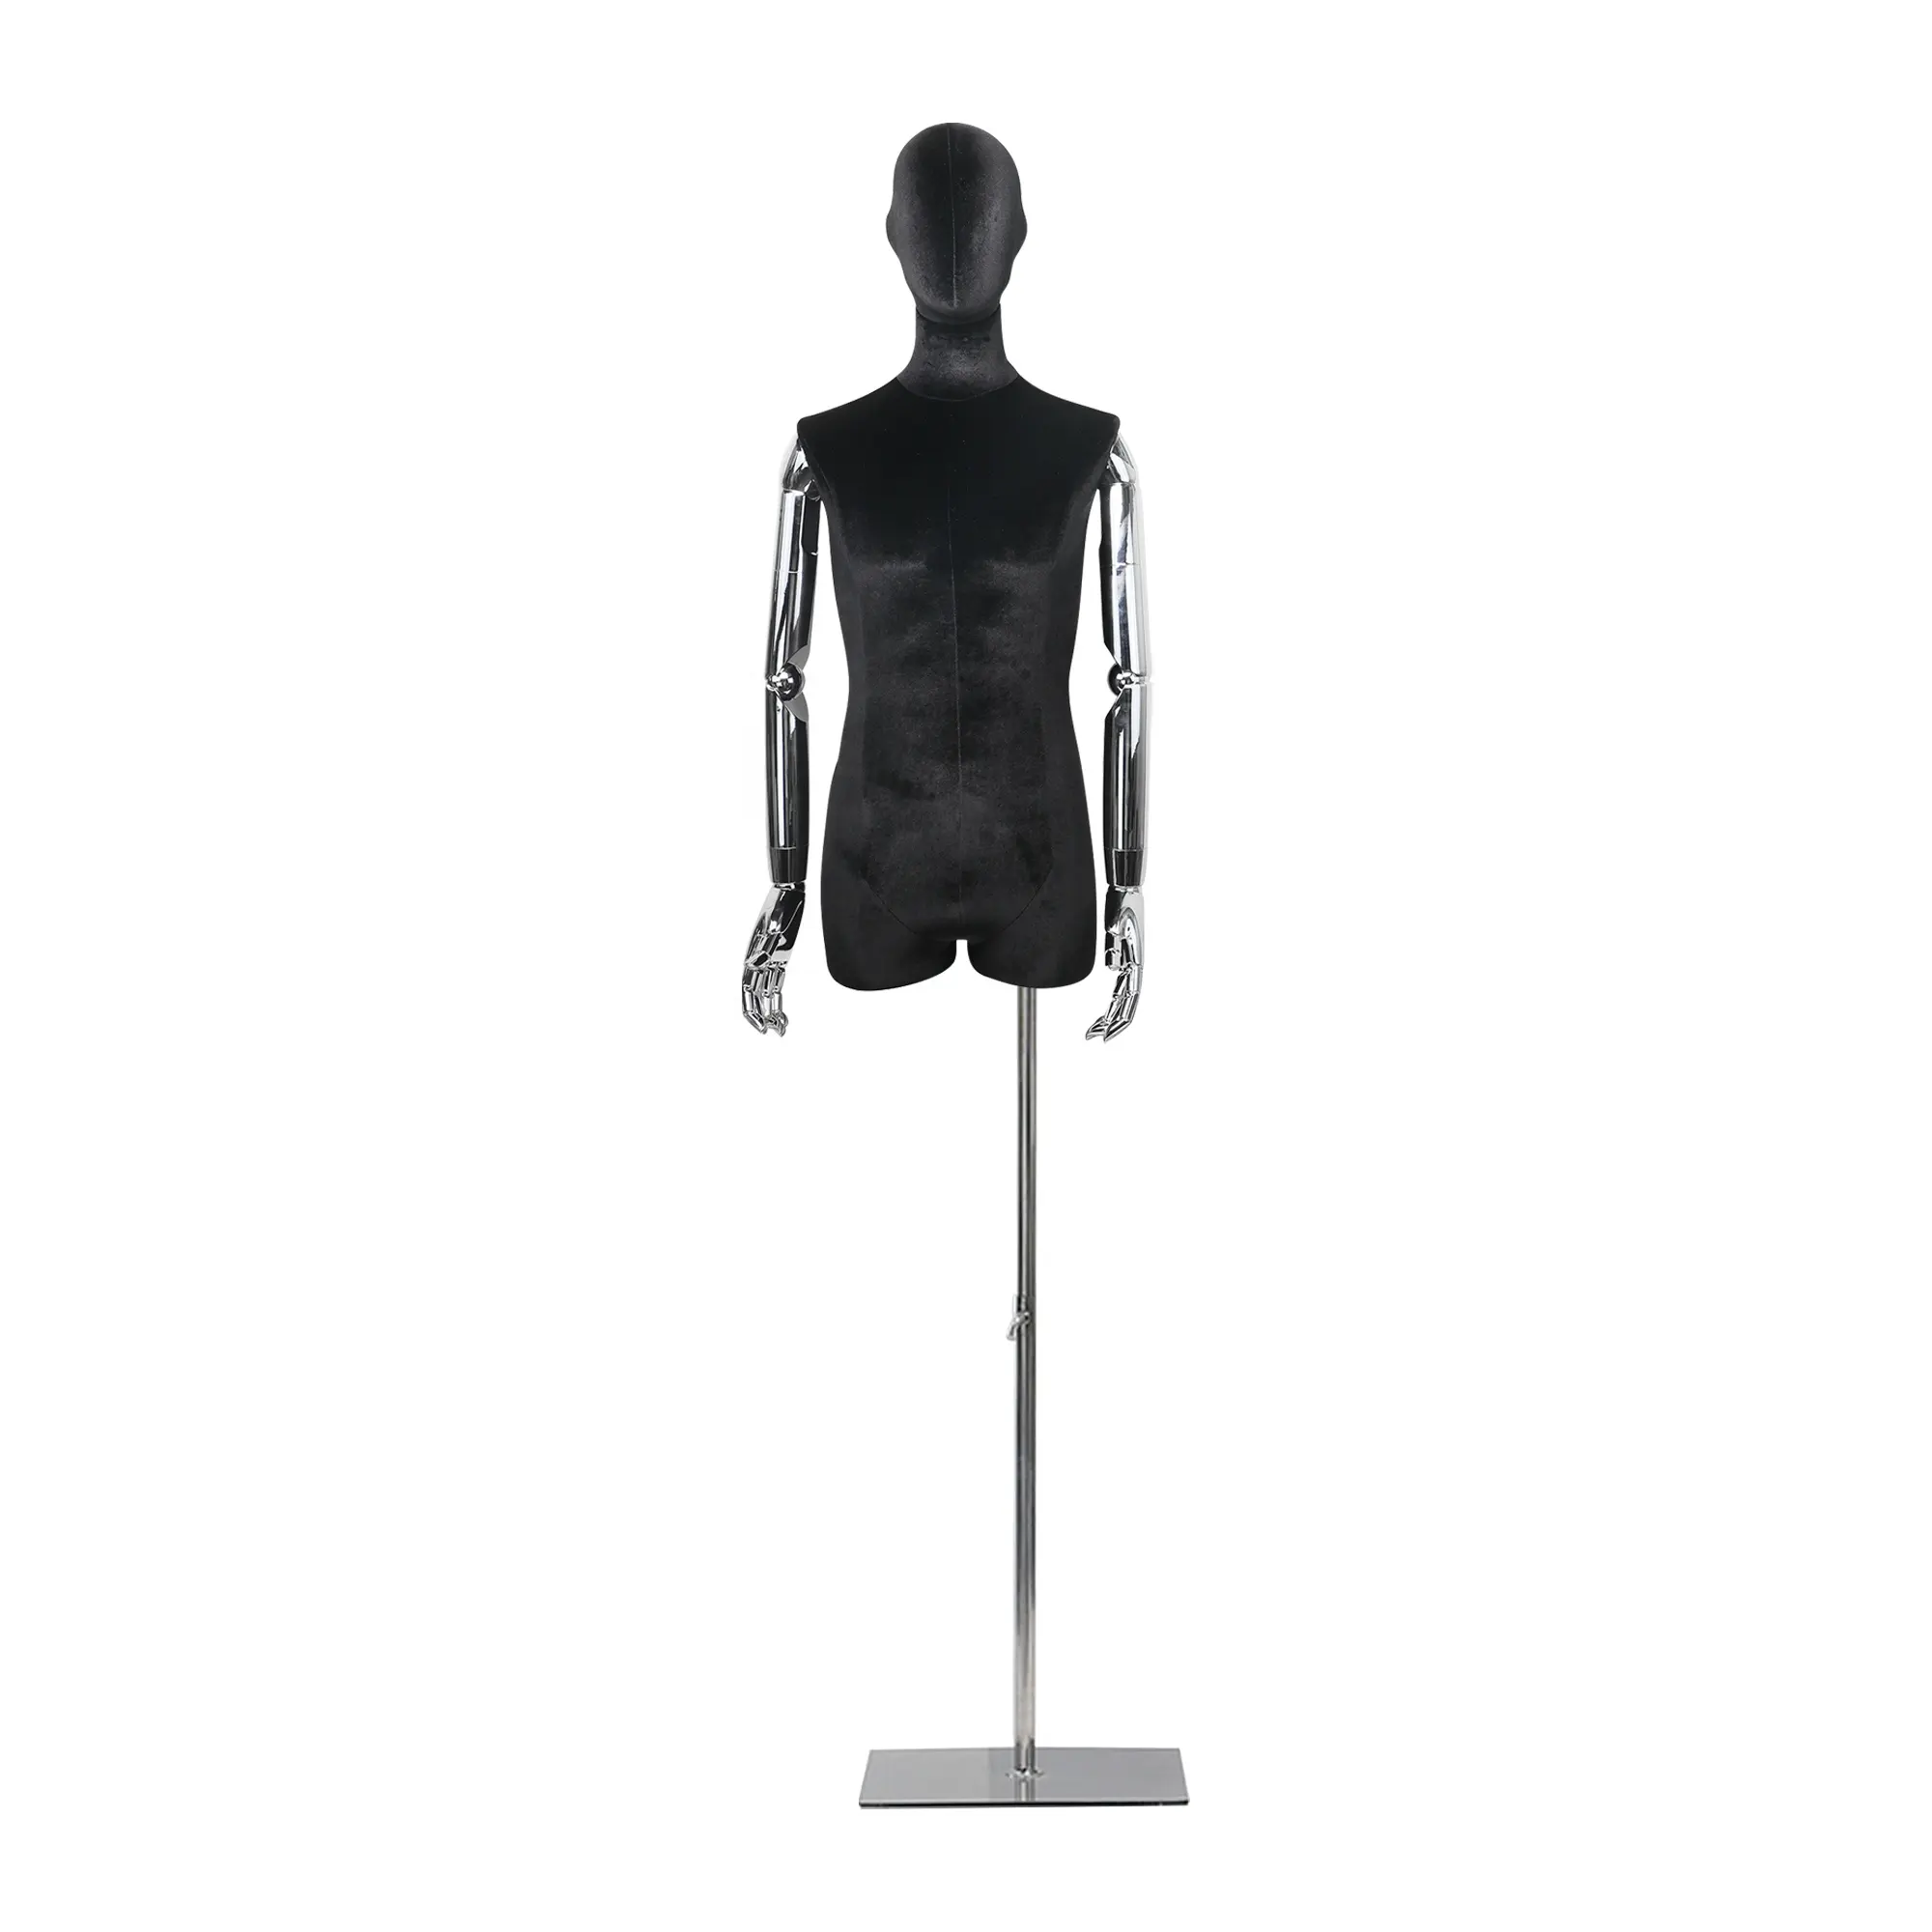 Clothing Store Shop Black Half Body Male Mannequin Torso Display Dress Form Fashion Men Velvet Mannequin Torso Model Display